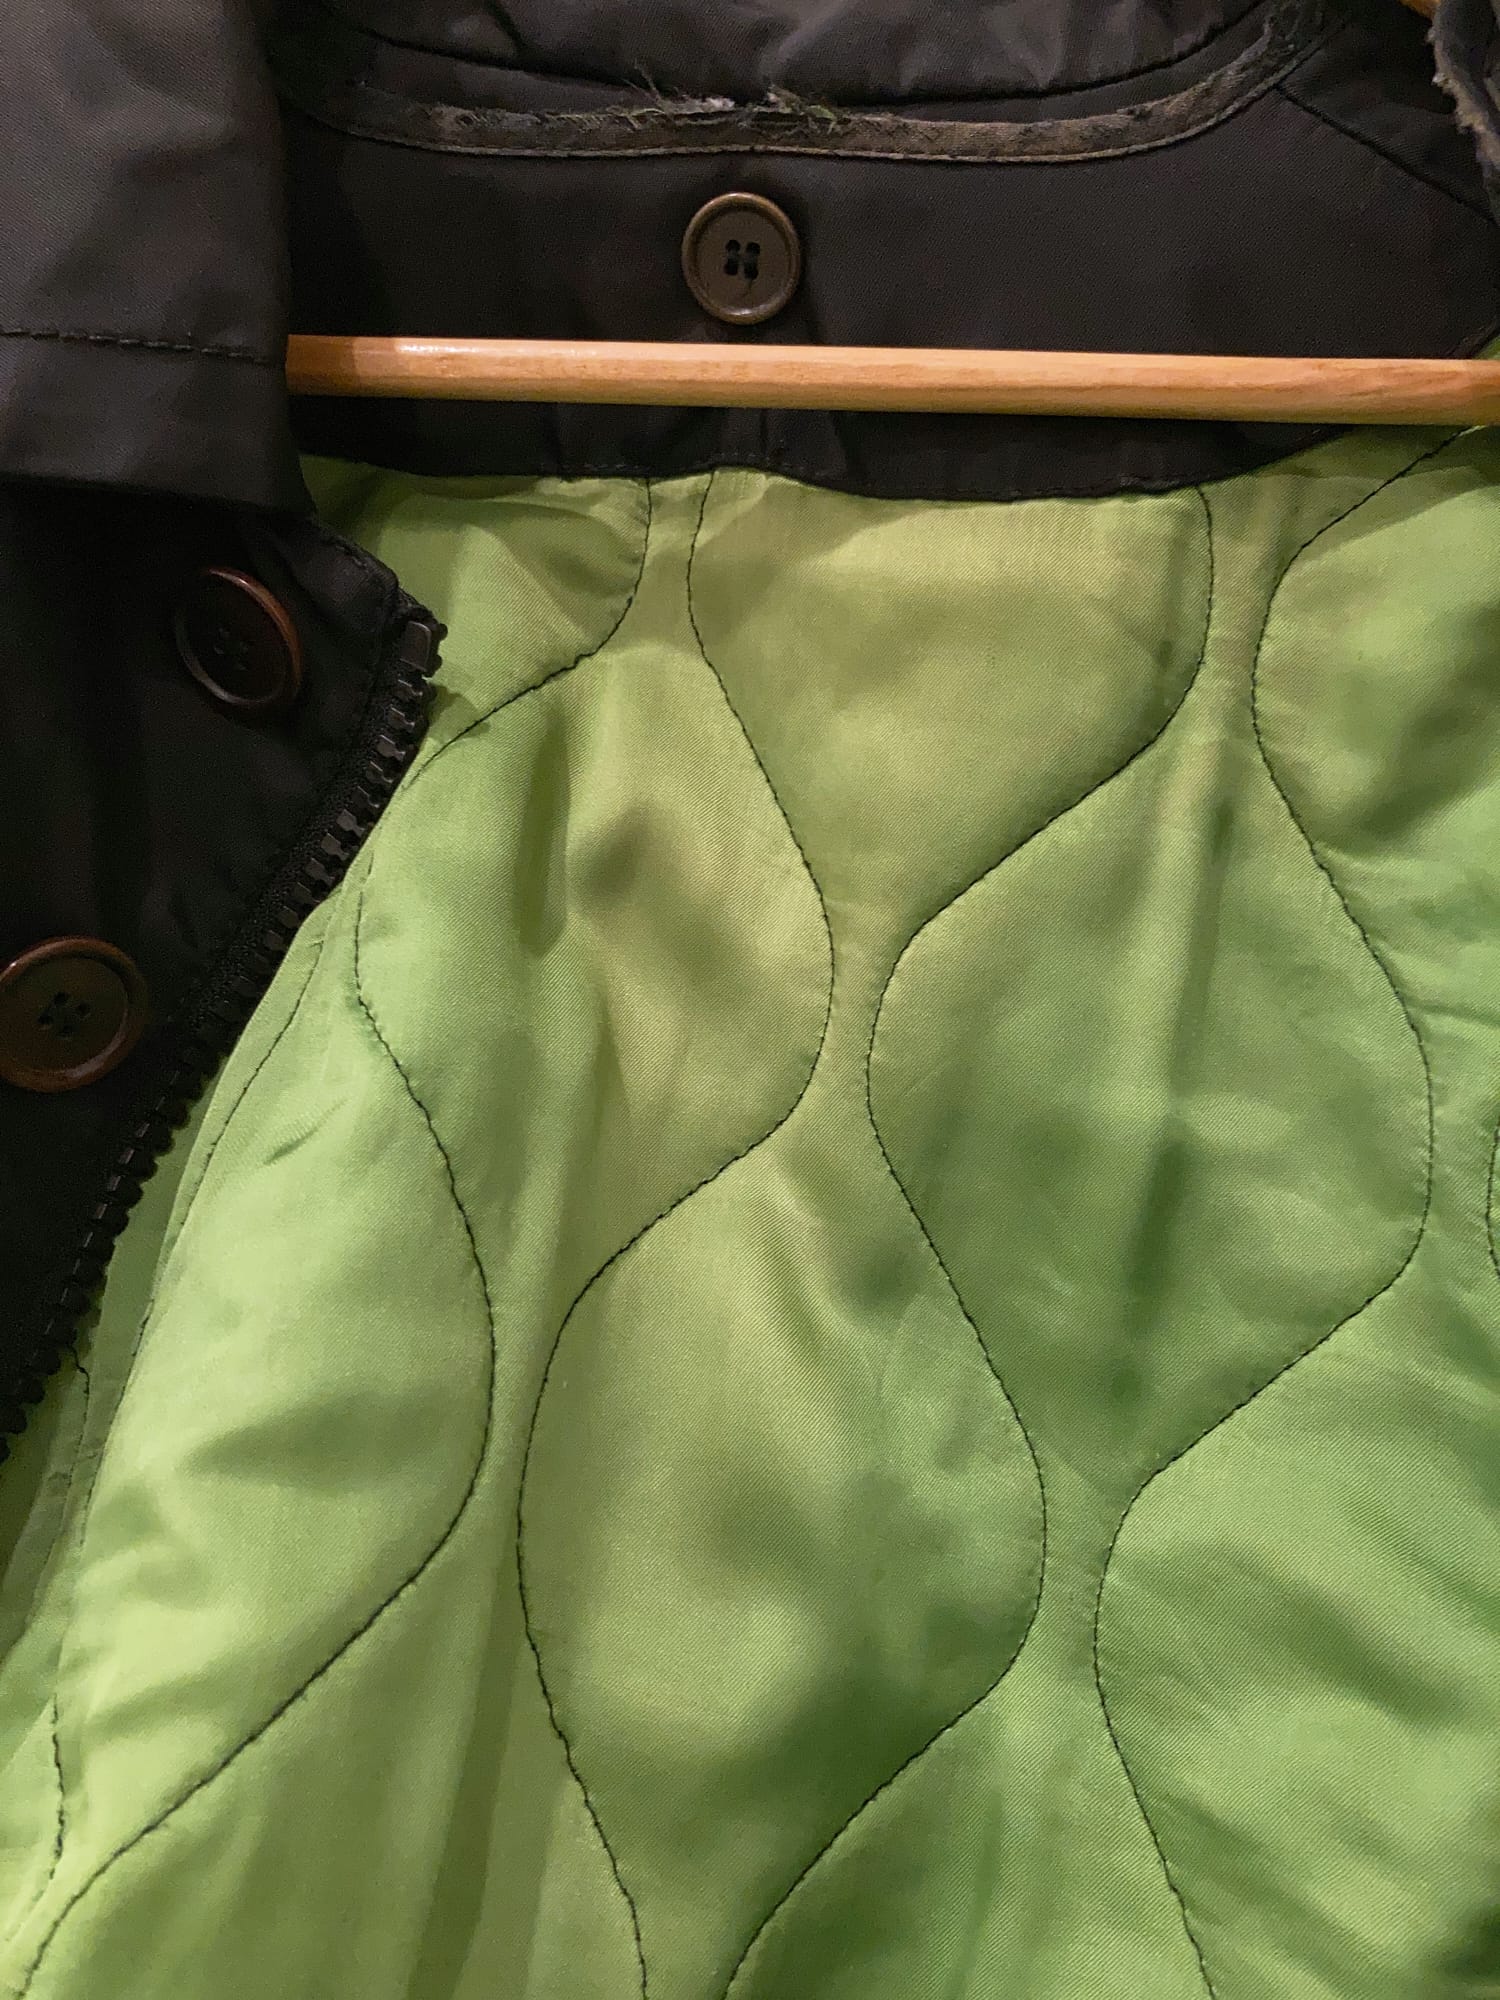 Dirk Bikkembergs 1990s black nylon back cargo pocket coat with removable liner